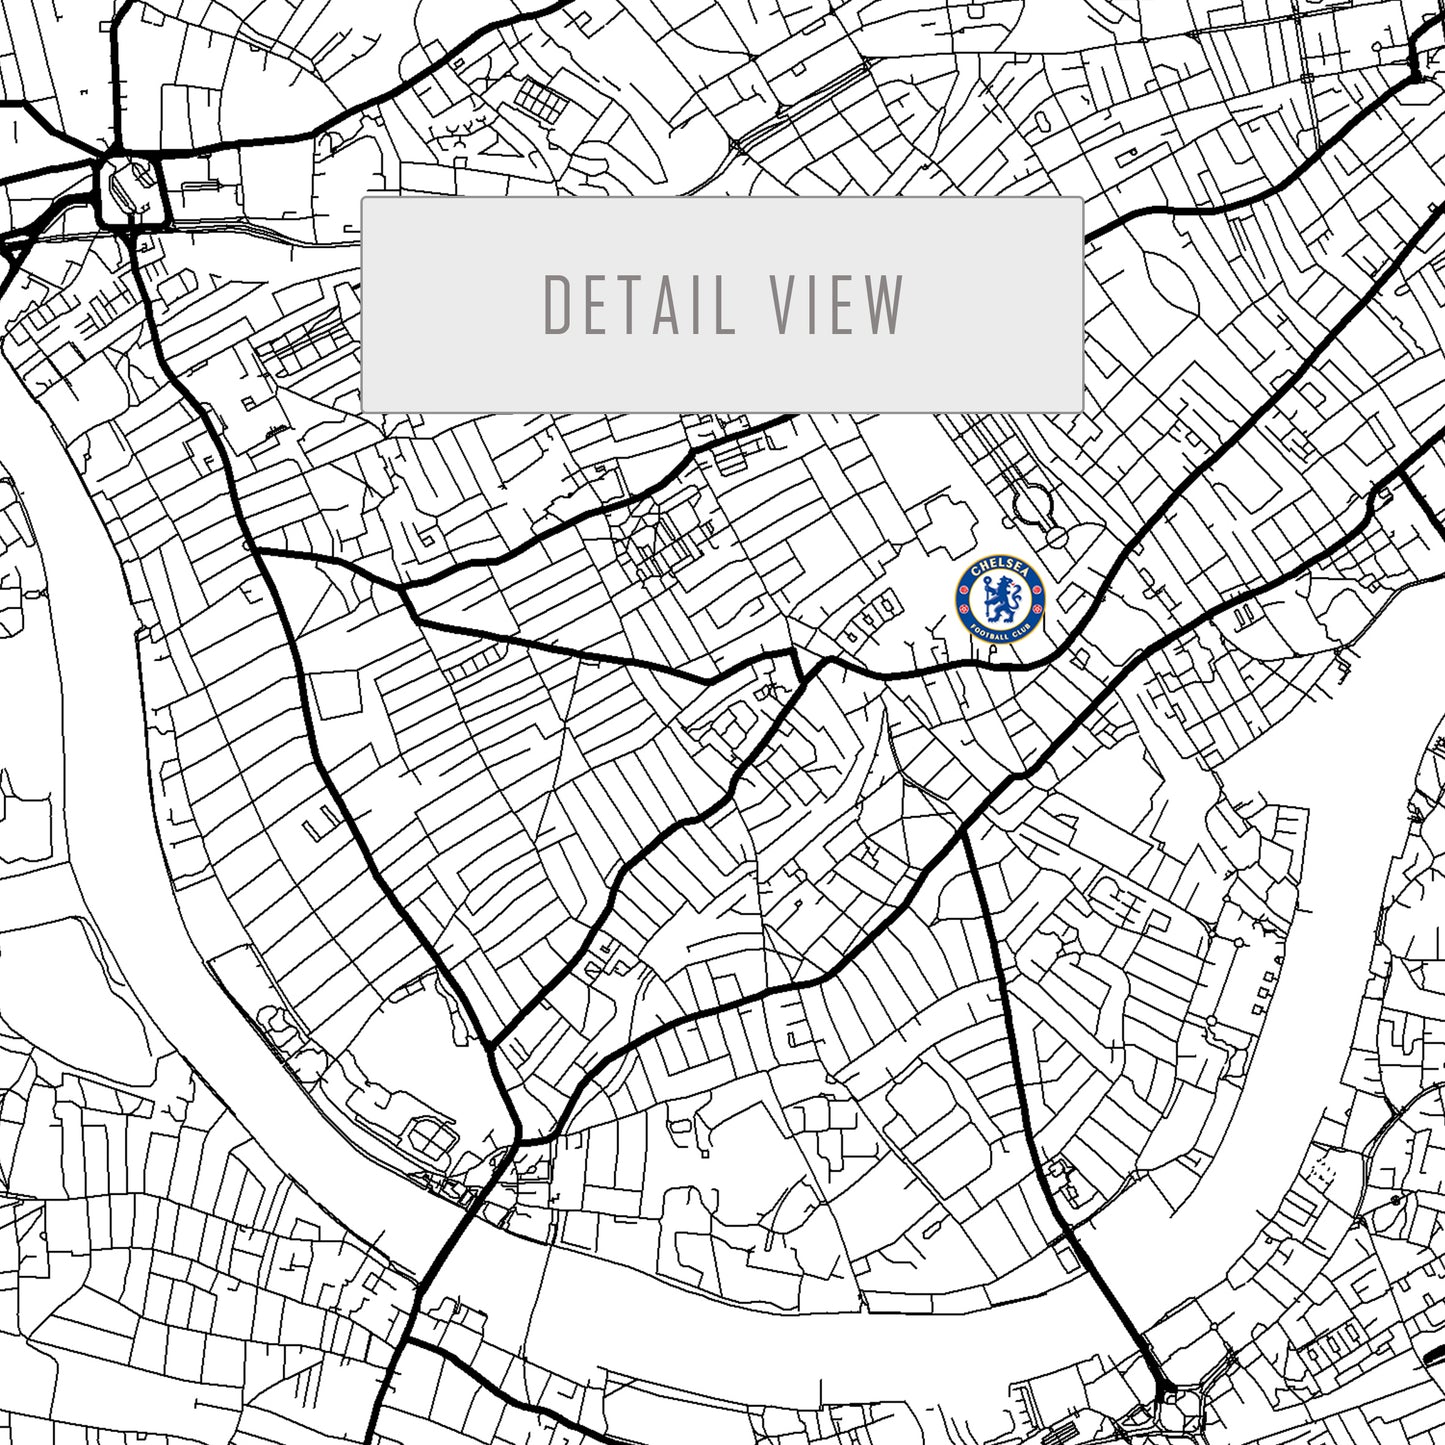 Map of London- Stamford Bridge